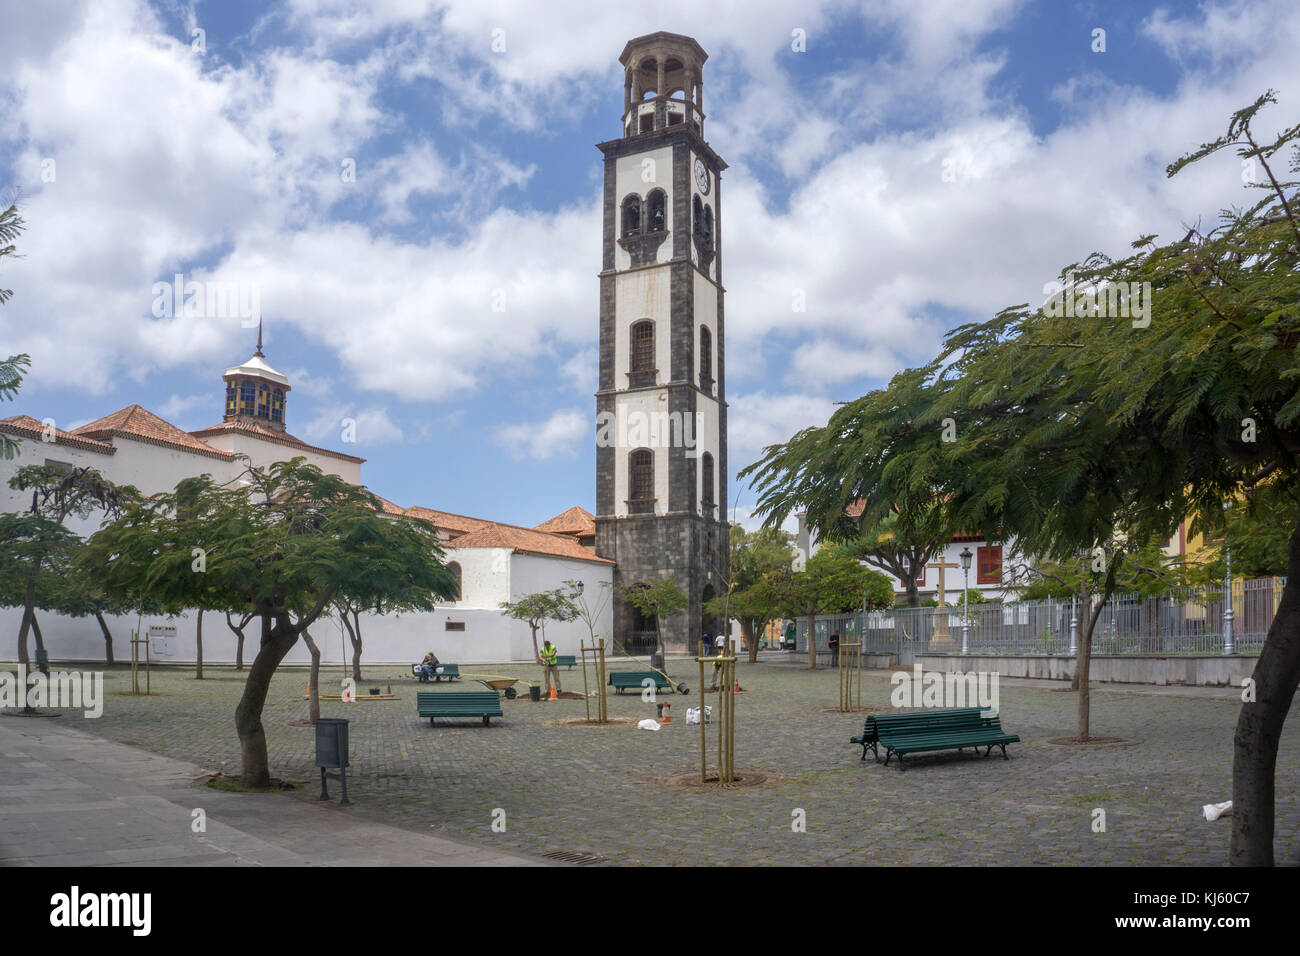 Plaza de la Iglesia and bell tower of Nuestra Senora de la Concepcion, Santa Cruz de Tenerife, Tenerife island, Canary islands, Spain Stock Photo